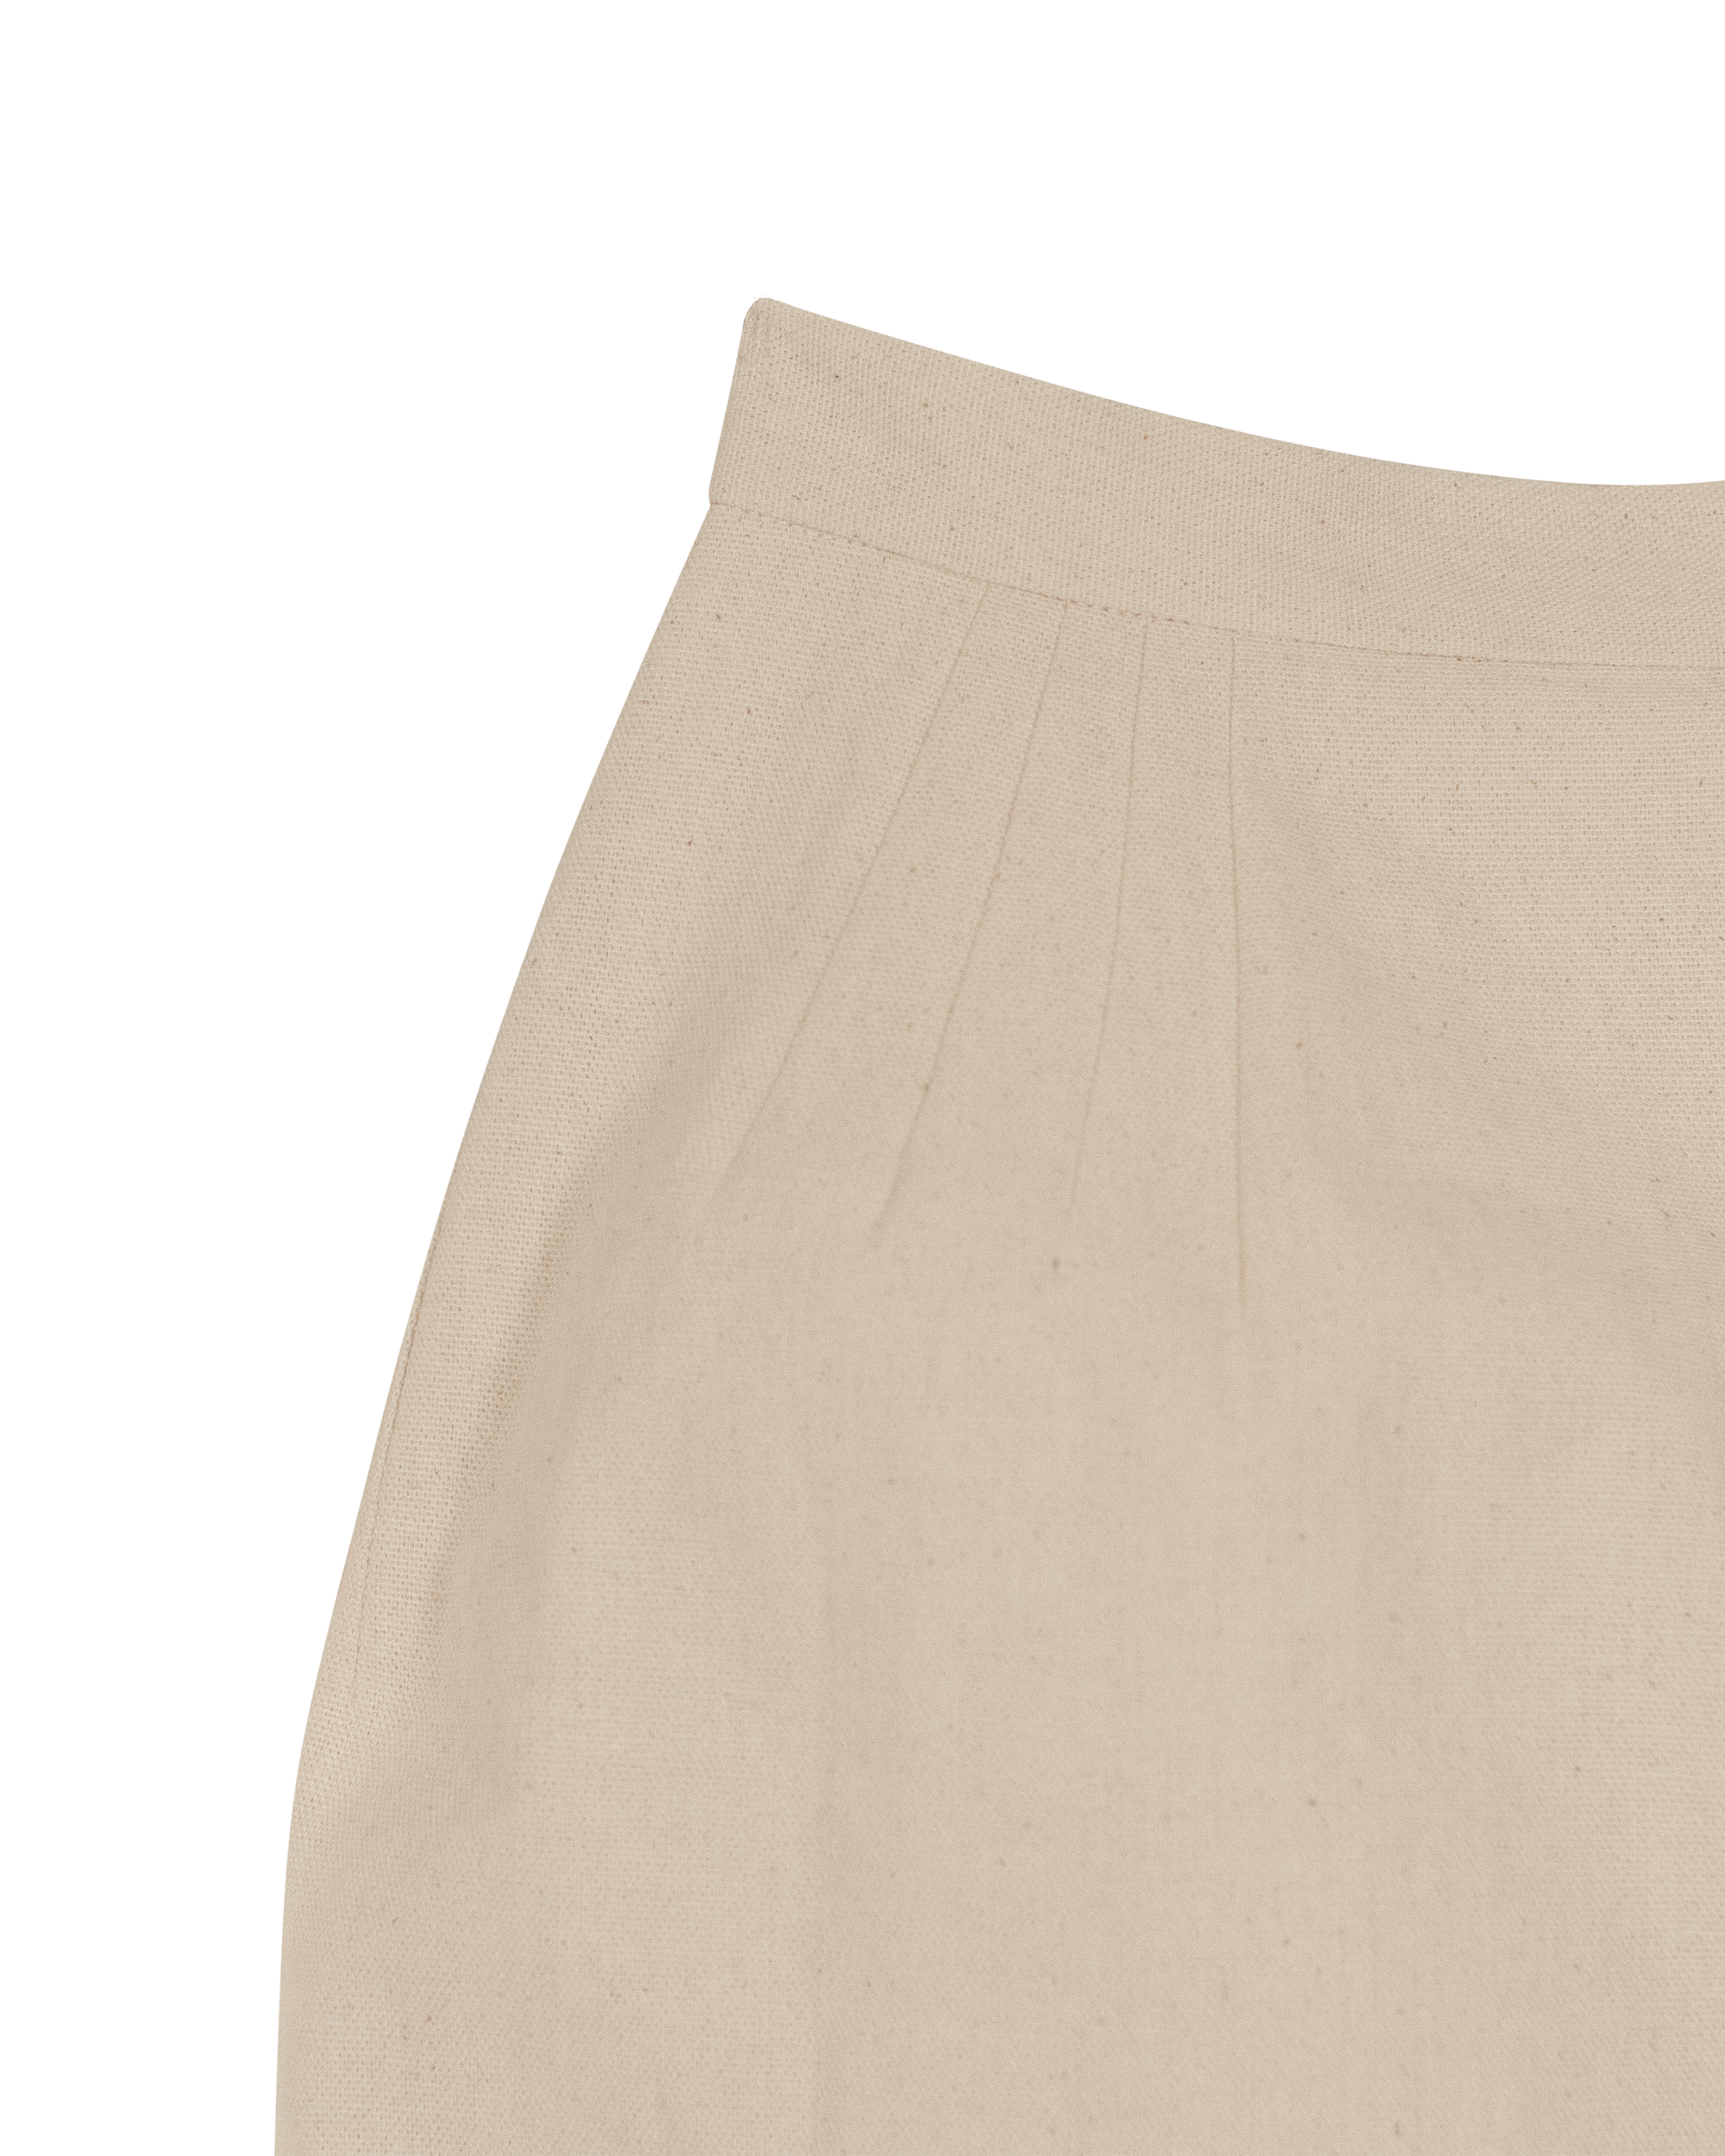 Two-ply Back Split Pencil Skirt